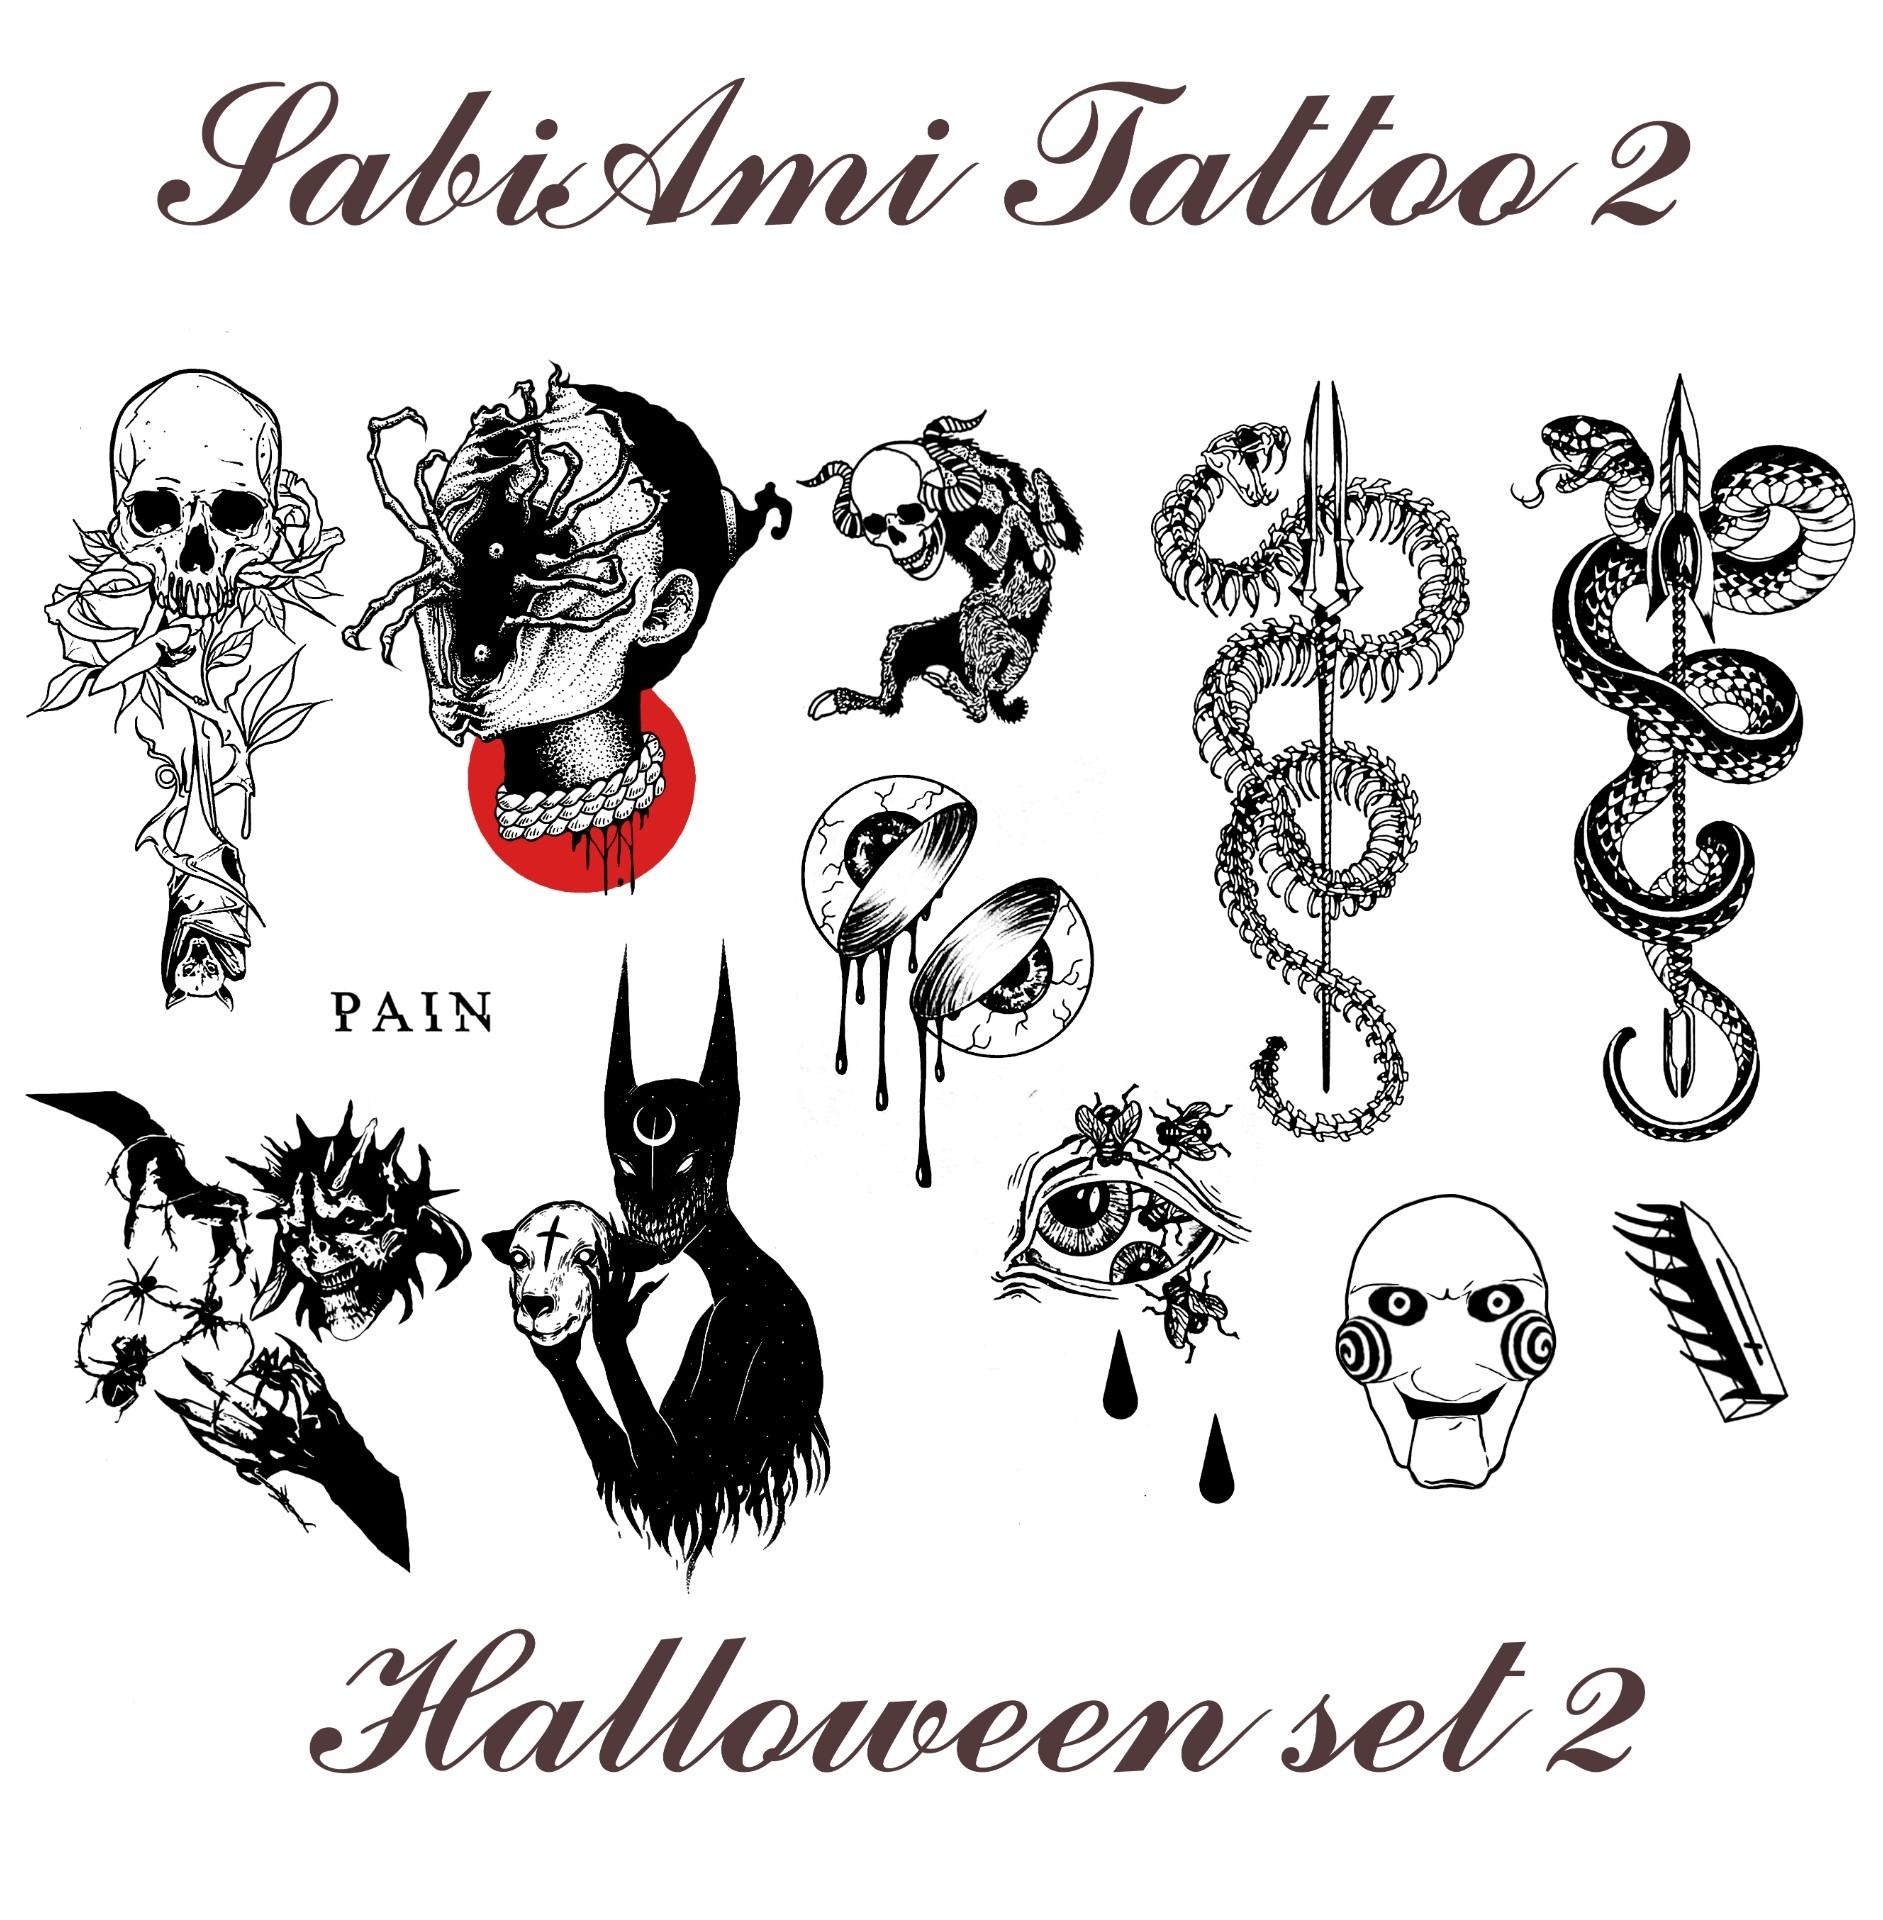 SabiAmi Tattoo 2 (Halloween set 2).png